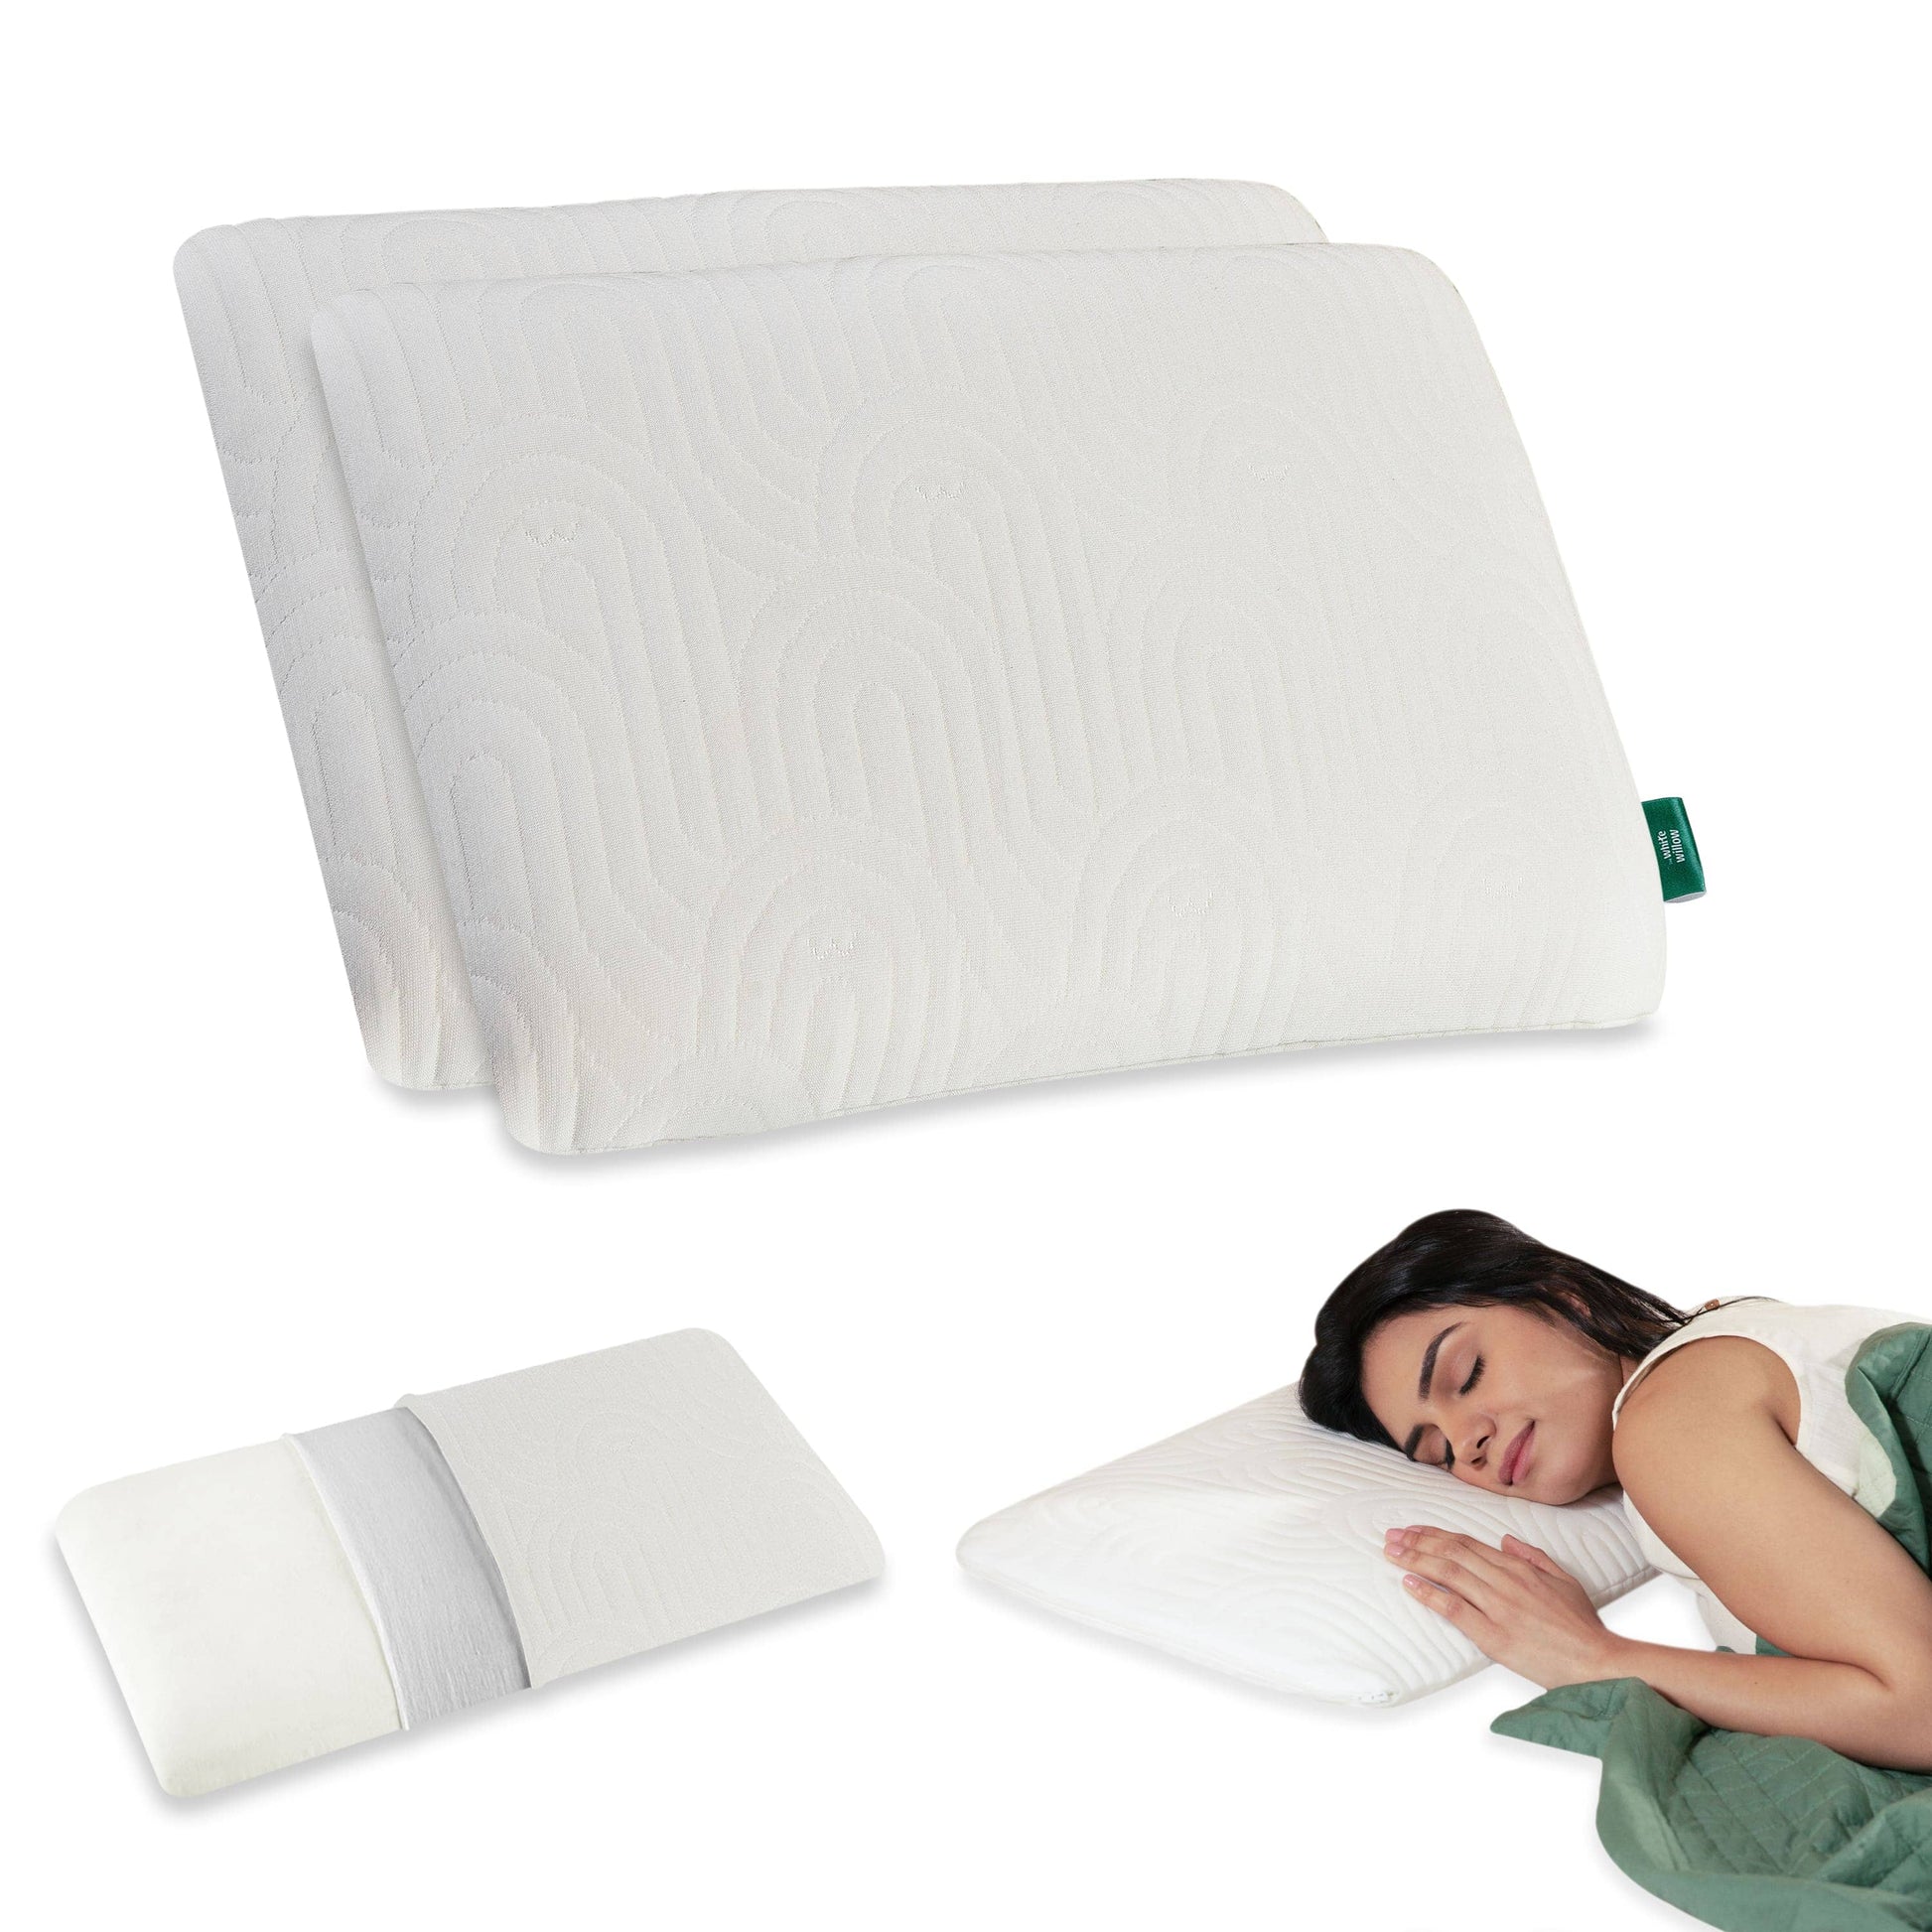 Cypress - Memory Foam Pillow - Regular - Medium Firm Regular Pillow The White Willow Ultra Slim 1.5"H King 24x16 Pack of 2 Multi